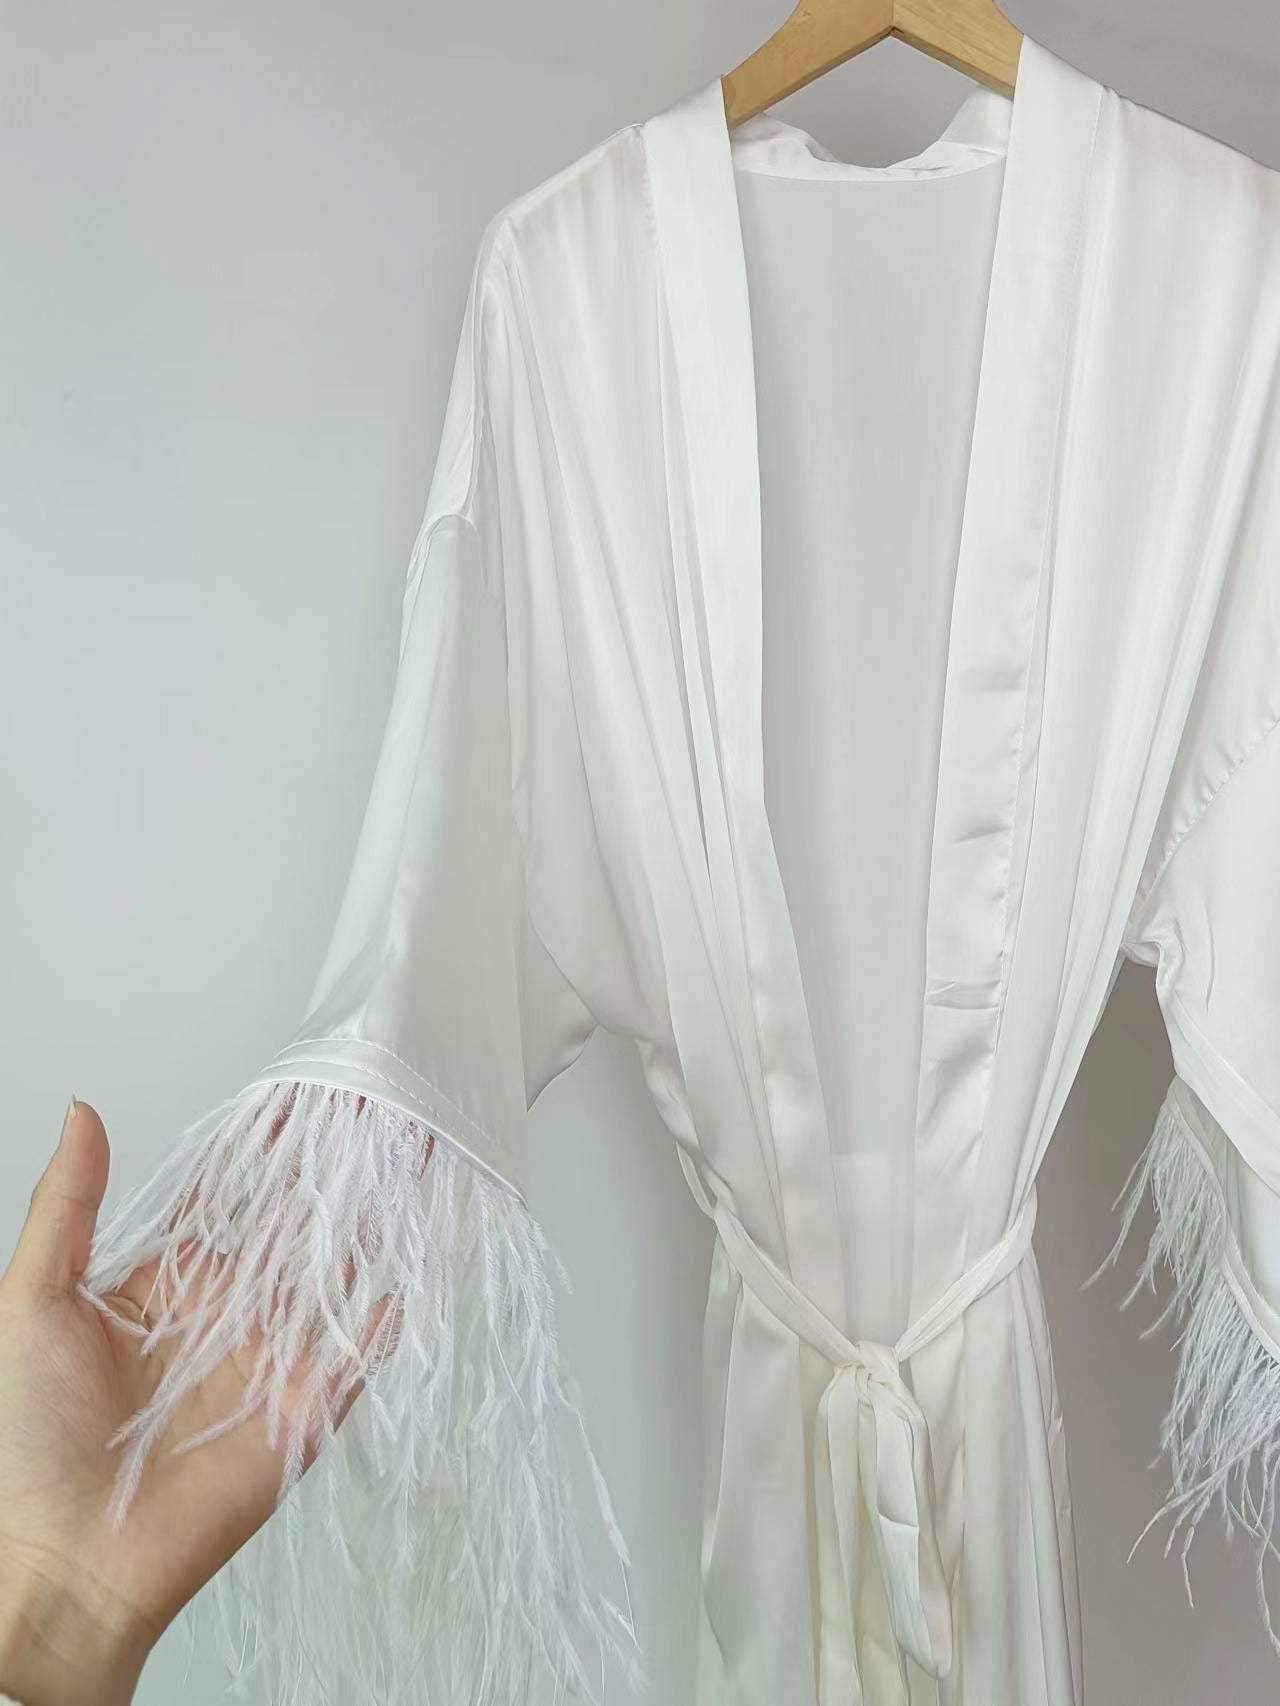 Lizakosht Bride Robe With Feather Sleeves White Boudoir Robe Long Gown Silk Bridal Wedding Dressing Gown Women Sheer Robes Bridesmaid Gift